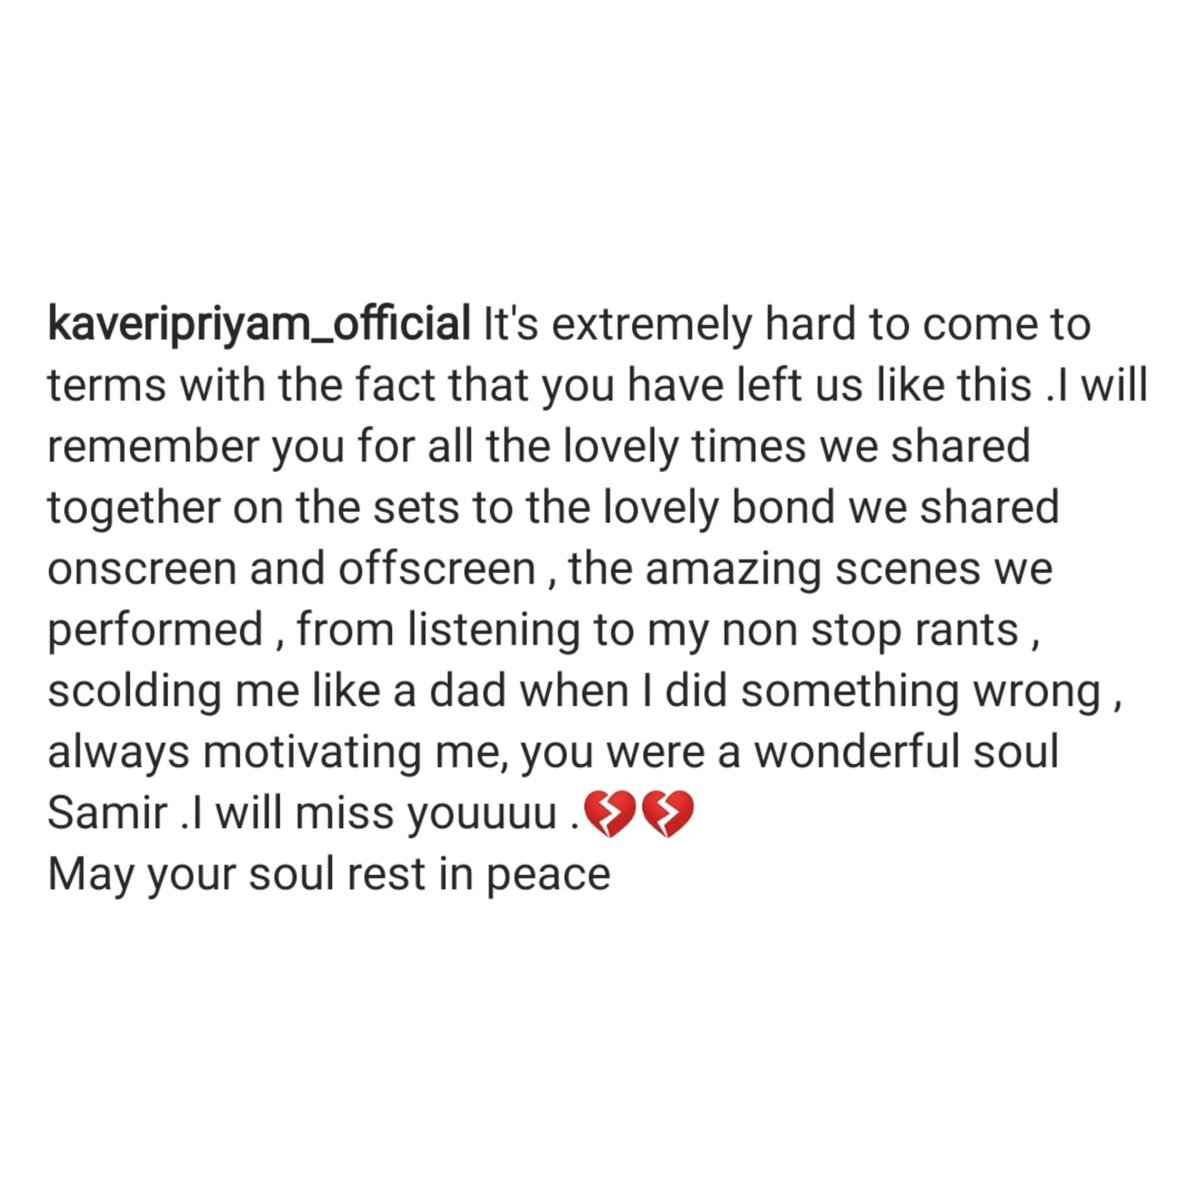 Kaveri's Instagram post remembering #SamirSharma Sir.

May his soul rest in peace. 

#RIPSamirSharma